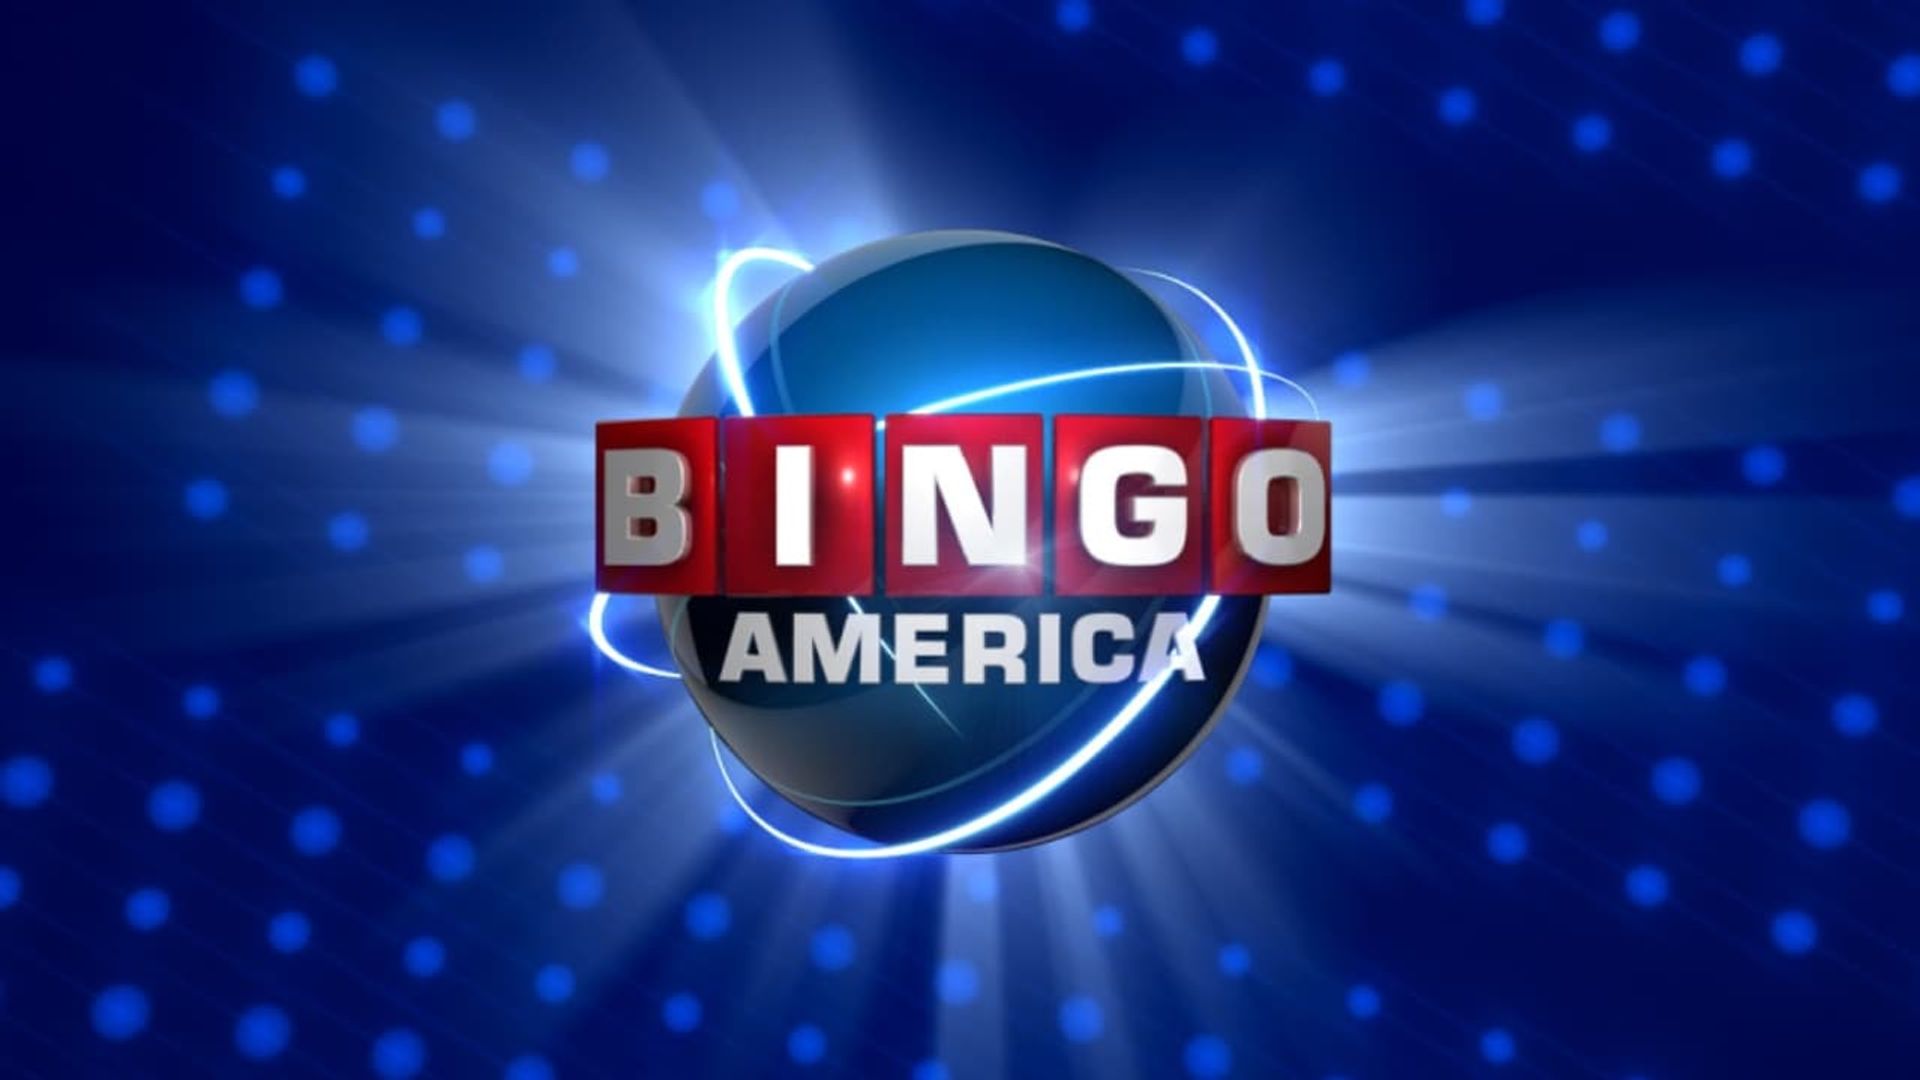 Bingo America background